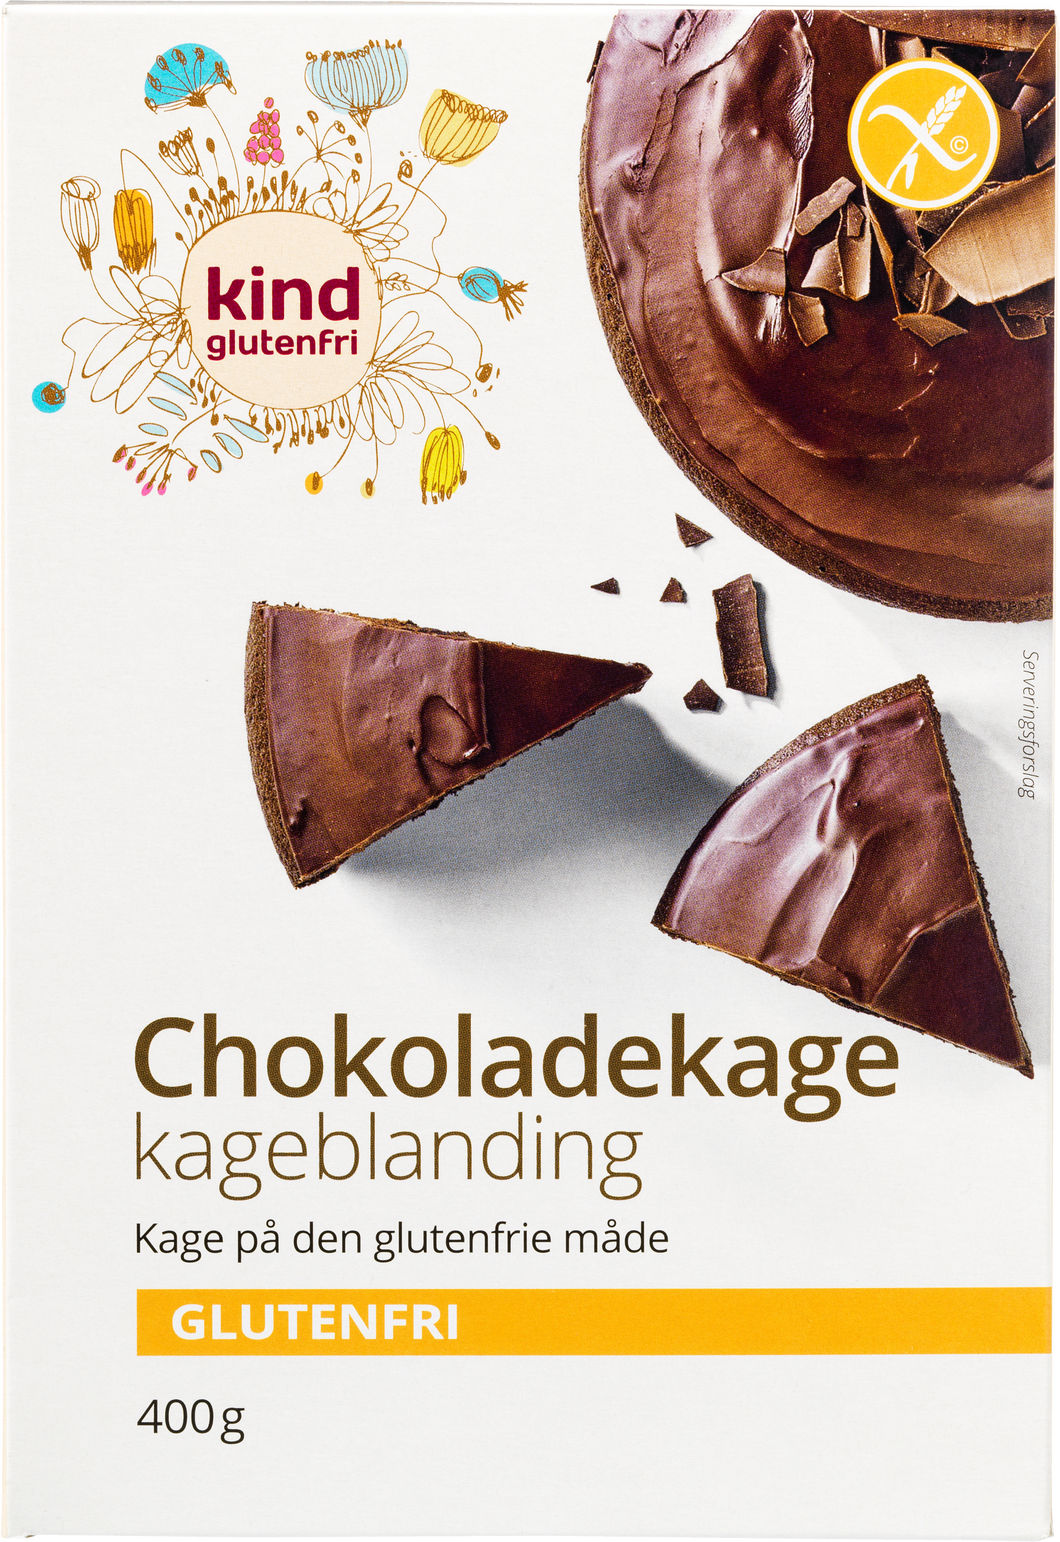 Kind Chokoladekage